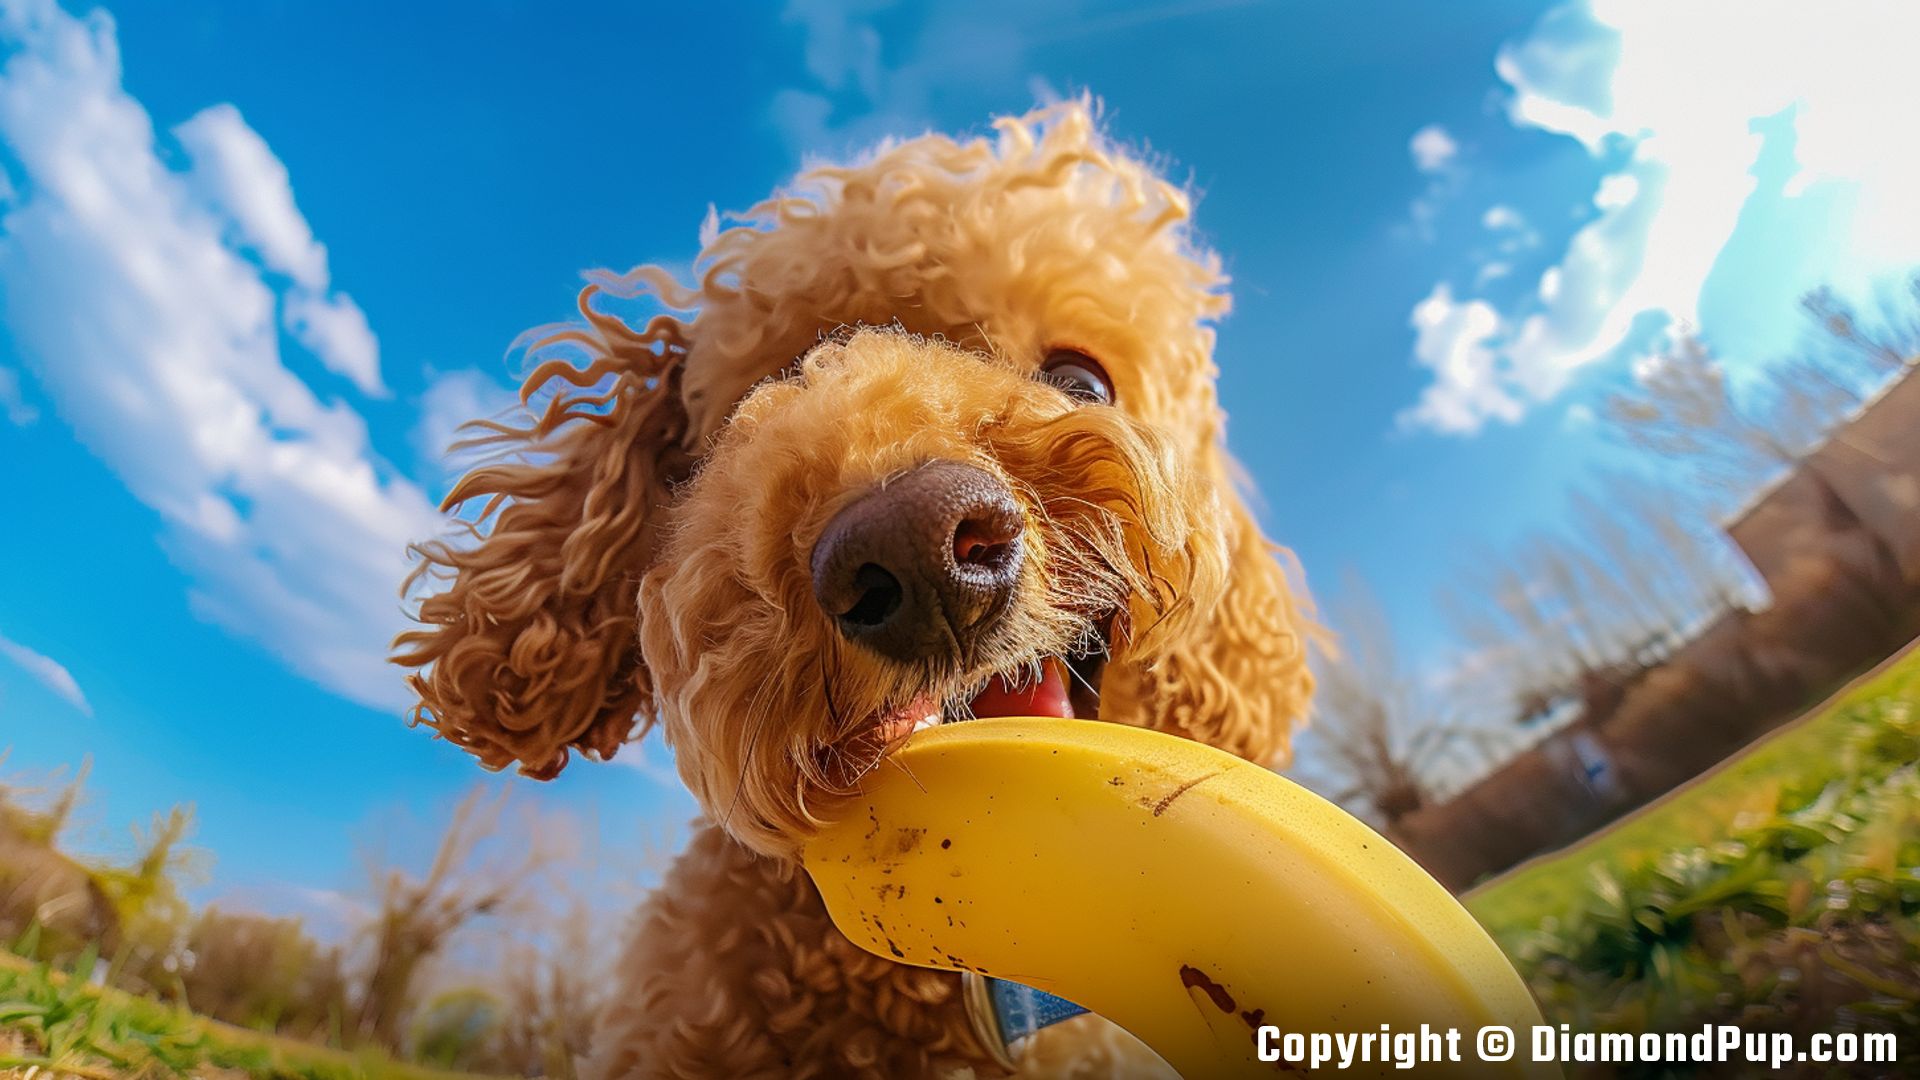 Image of Poodle Snacking on Banana